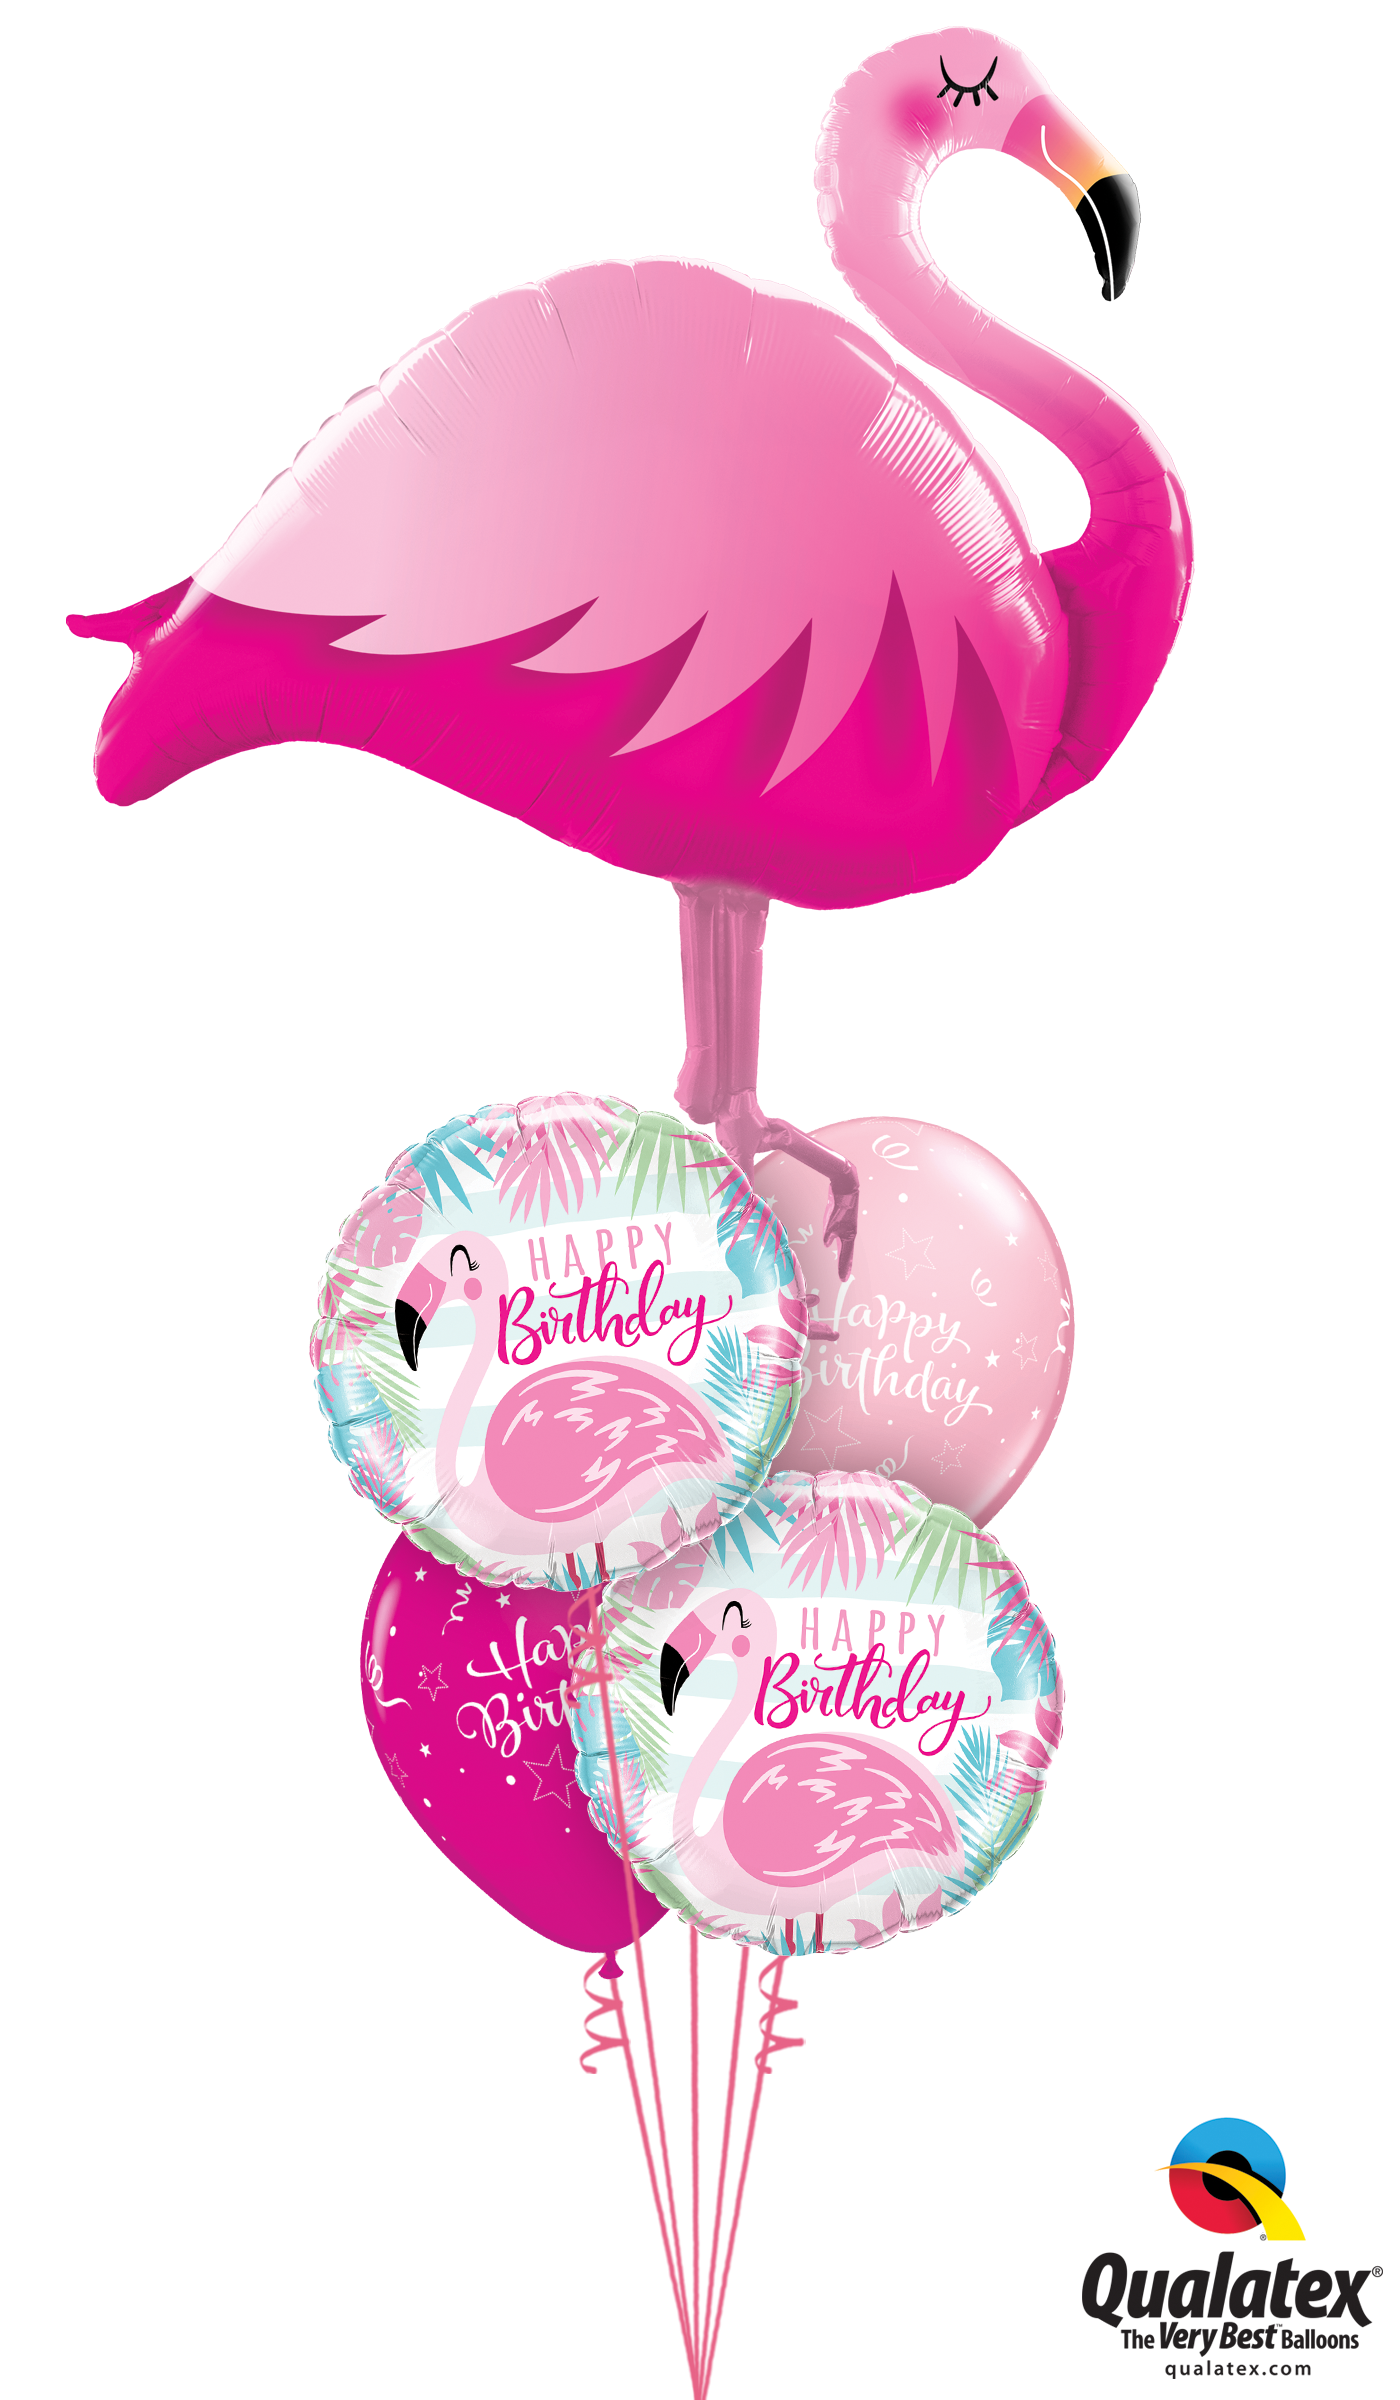 A Pink Flamingo Balloon And Balloons